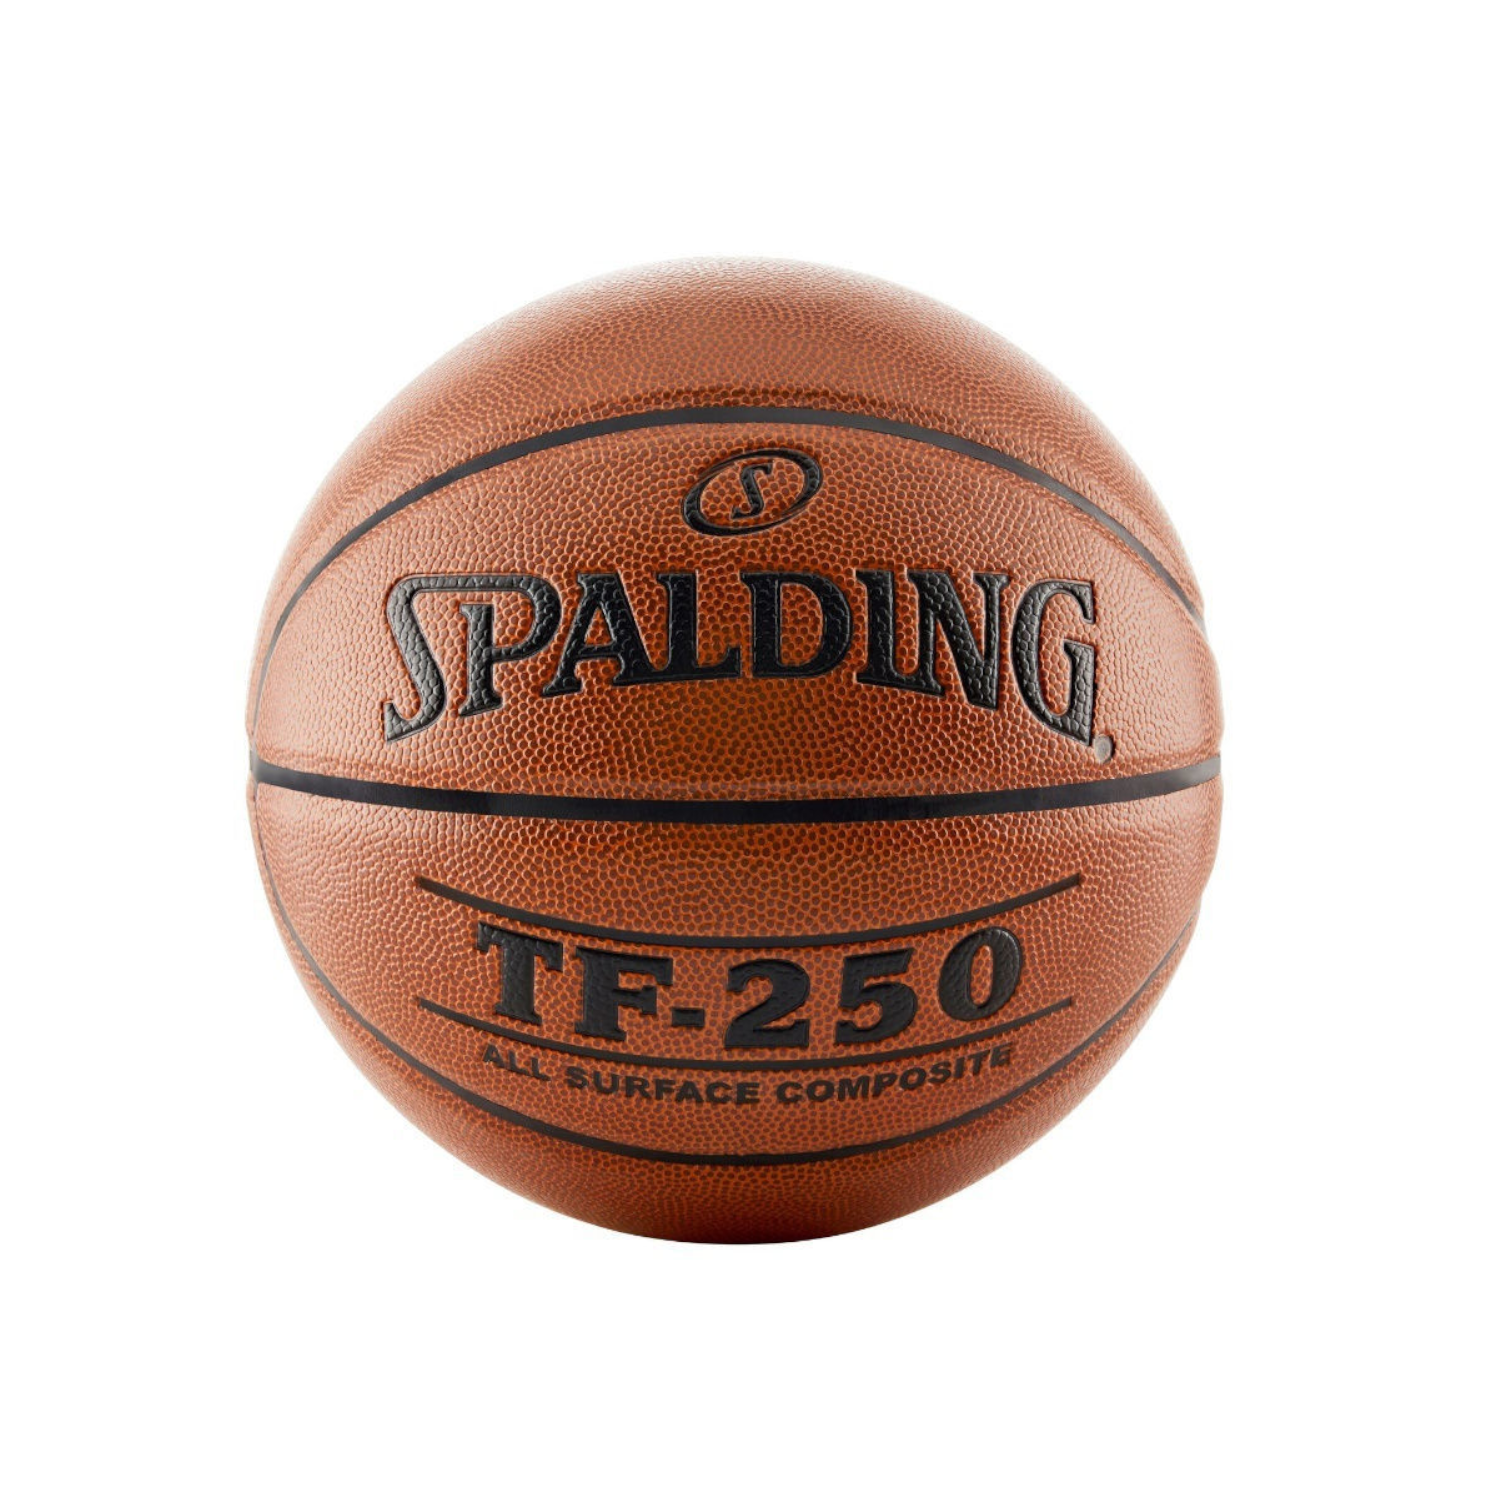 Баскетбольный мяч SPALDING TF-250 - фото 1